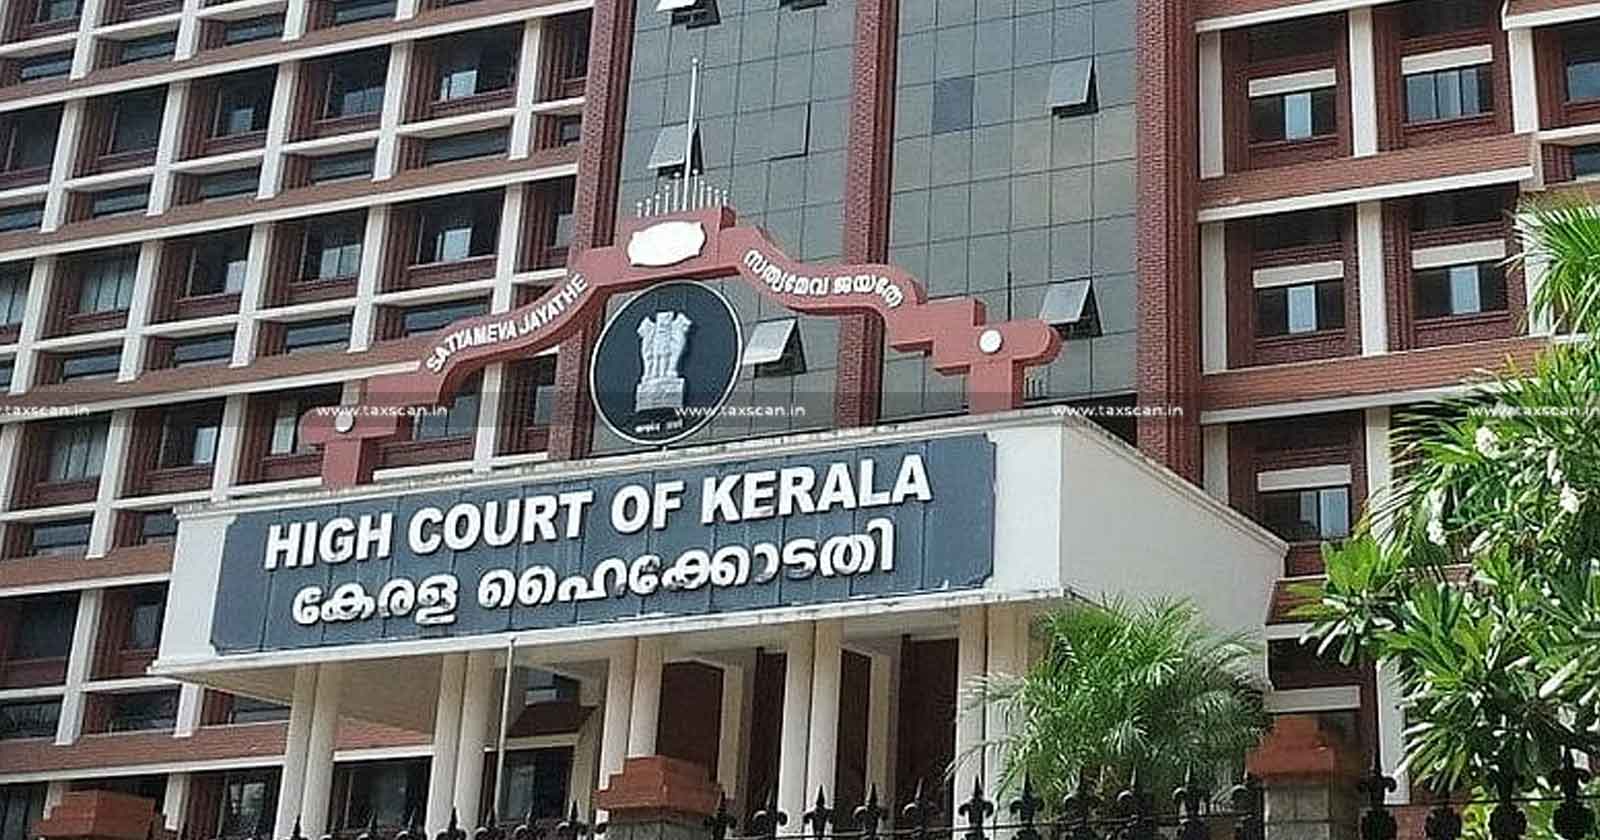 Kerala High Court - Kerala HC - Regular basis tax vs compound basis - Compound tax basis implications - Legal tax assessment changes India - Taxscan